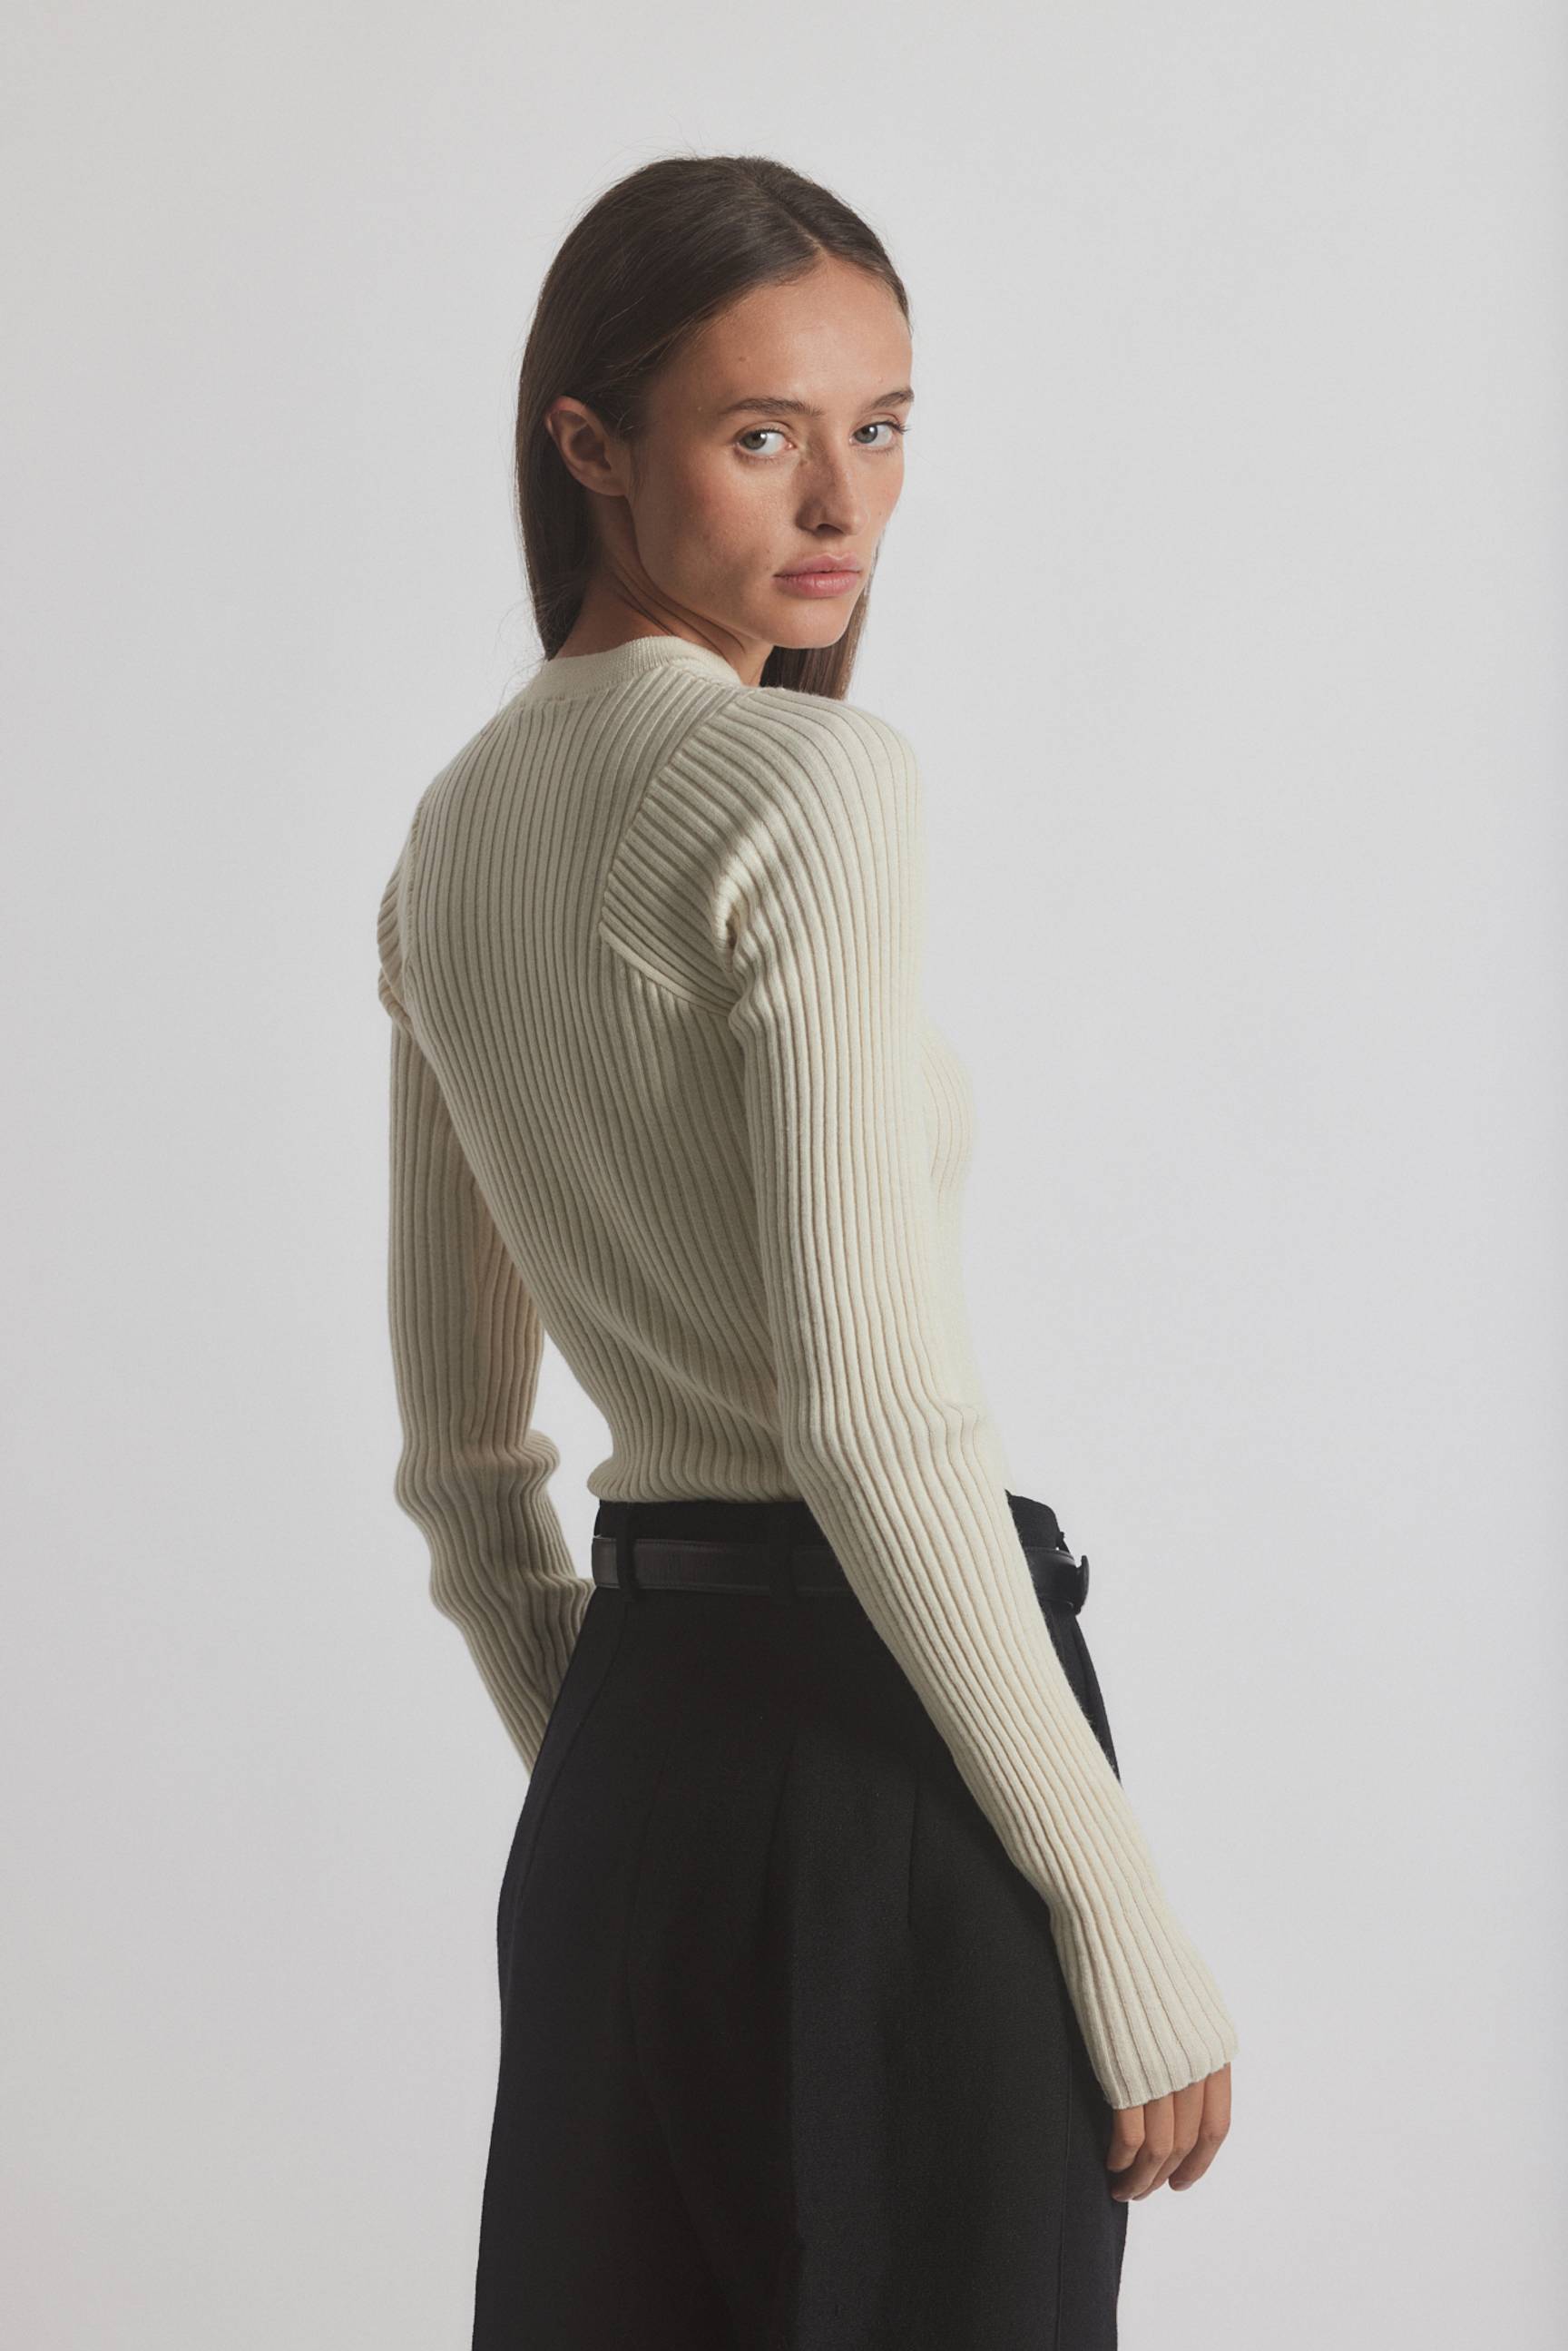 René | Sweater 01 | Janessa Leoné – Janessa Leone